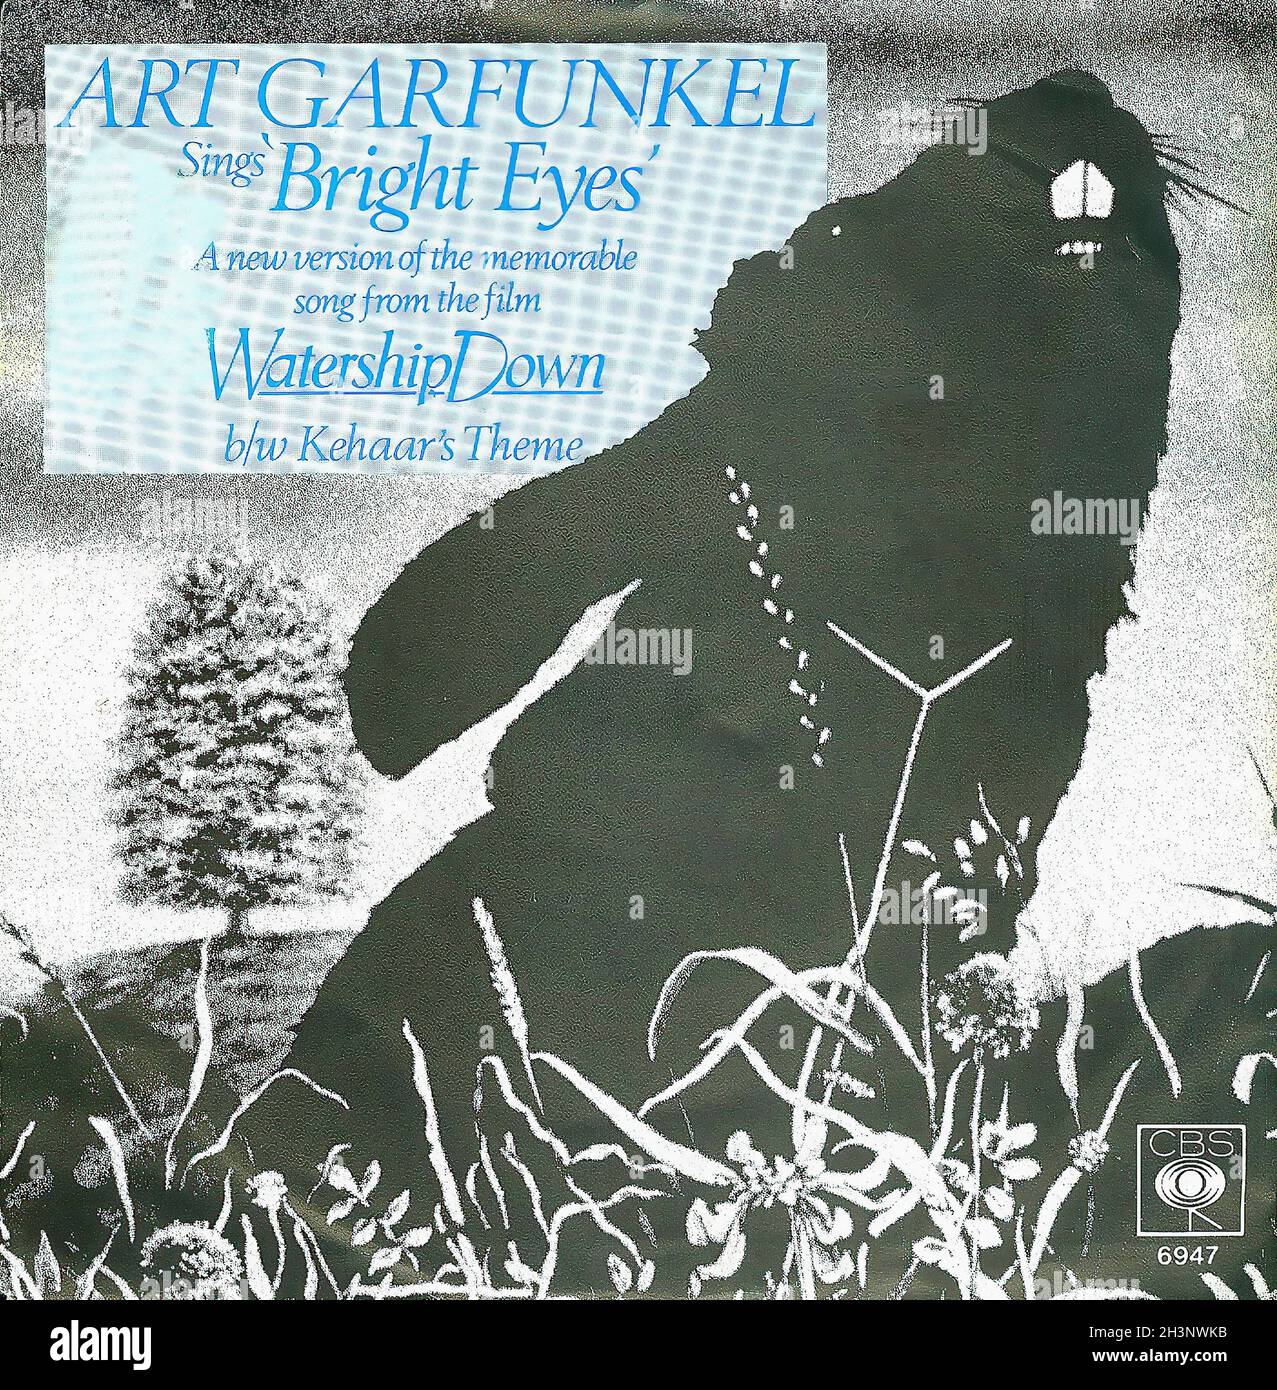 Vintage Vinyl Recording - Watership Down - Unten am Fluss - Bright Eyes - Art Garfunkel - D - 1978 Foto Stock